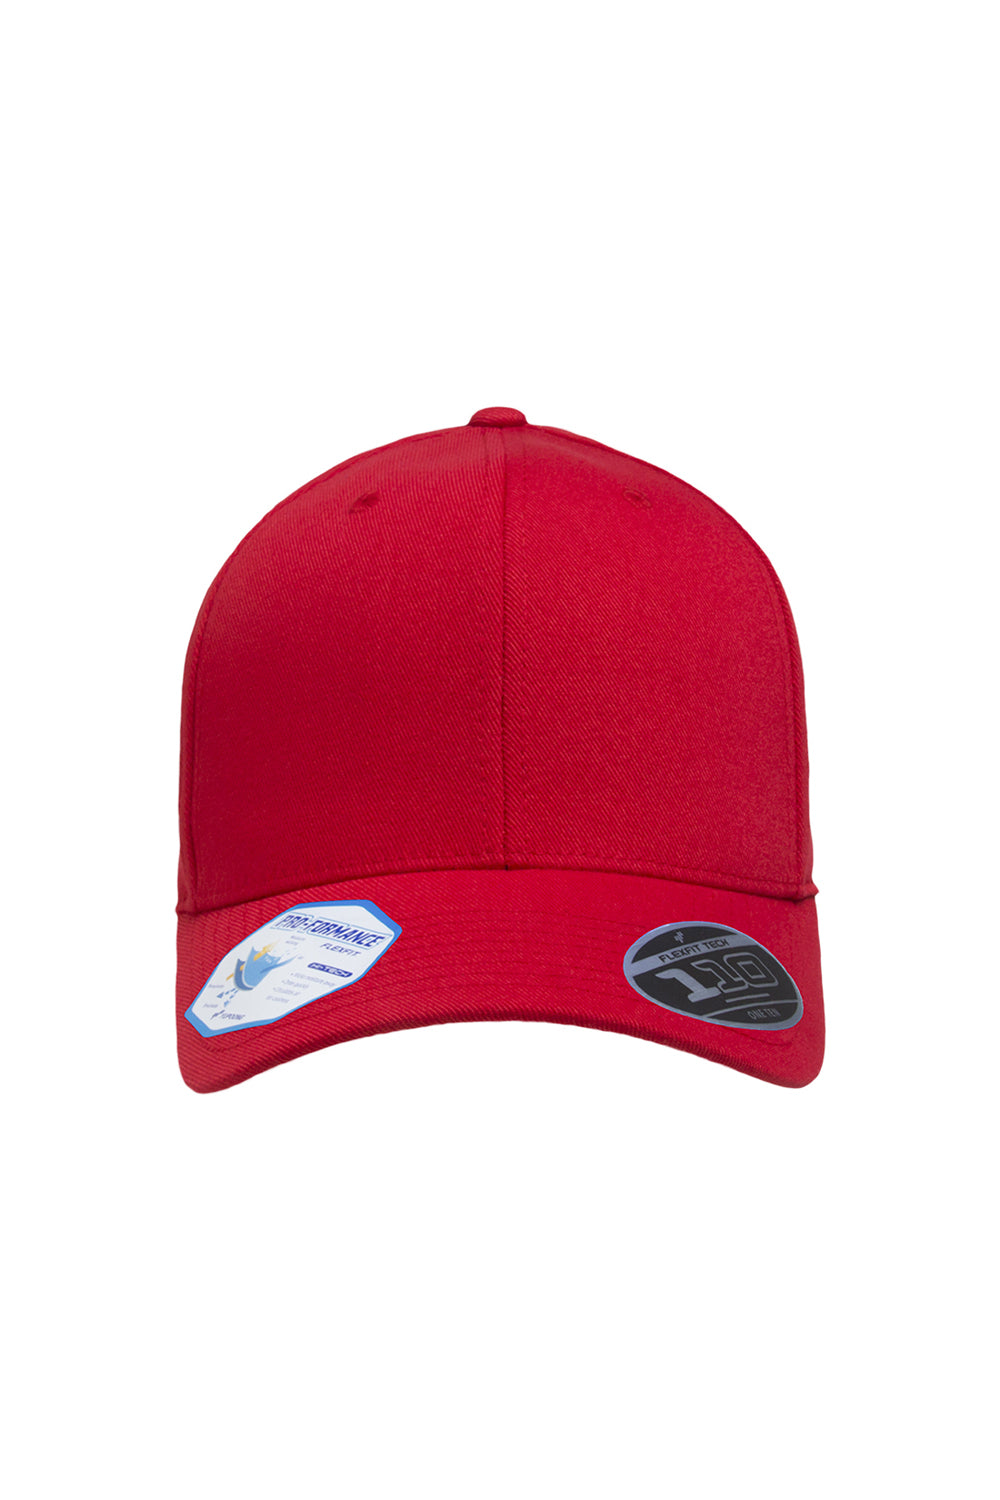 Flexfit 110C Mens Moisture Wicking Adjustable Hat Red Front